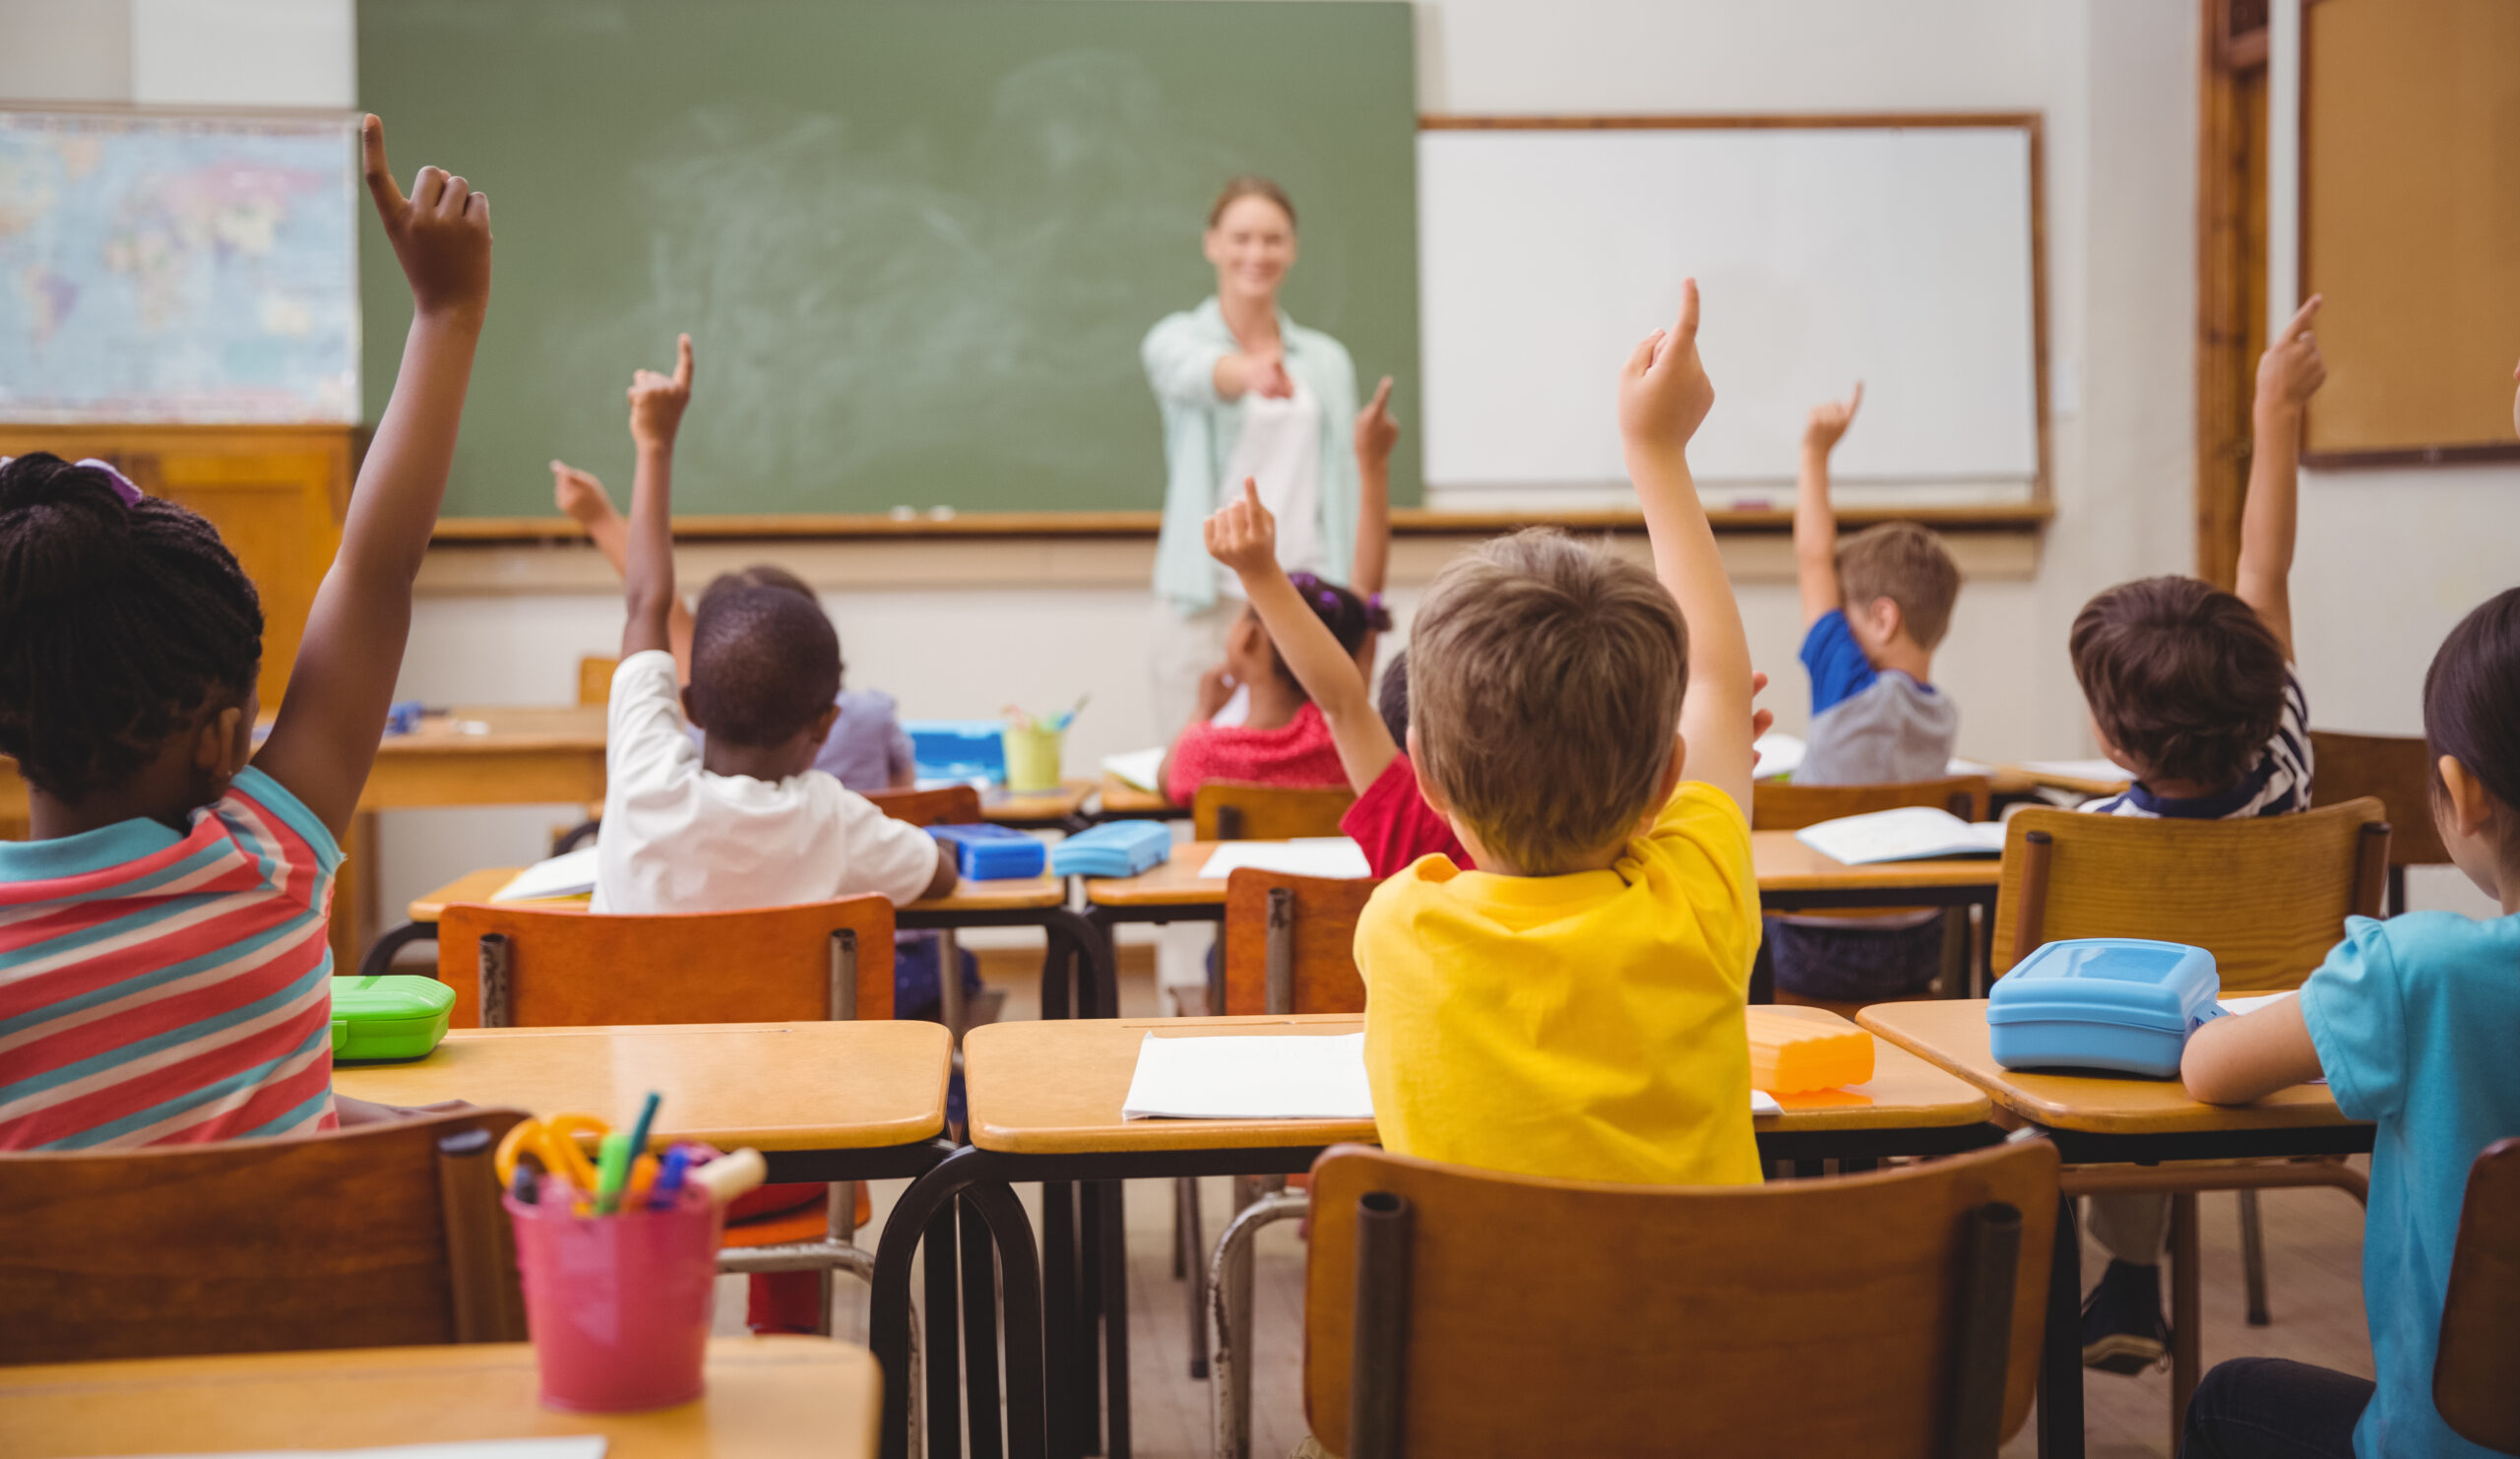 Children in the classroom raising their hands